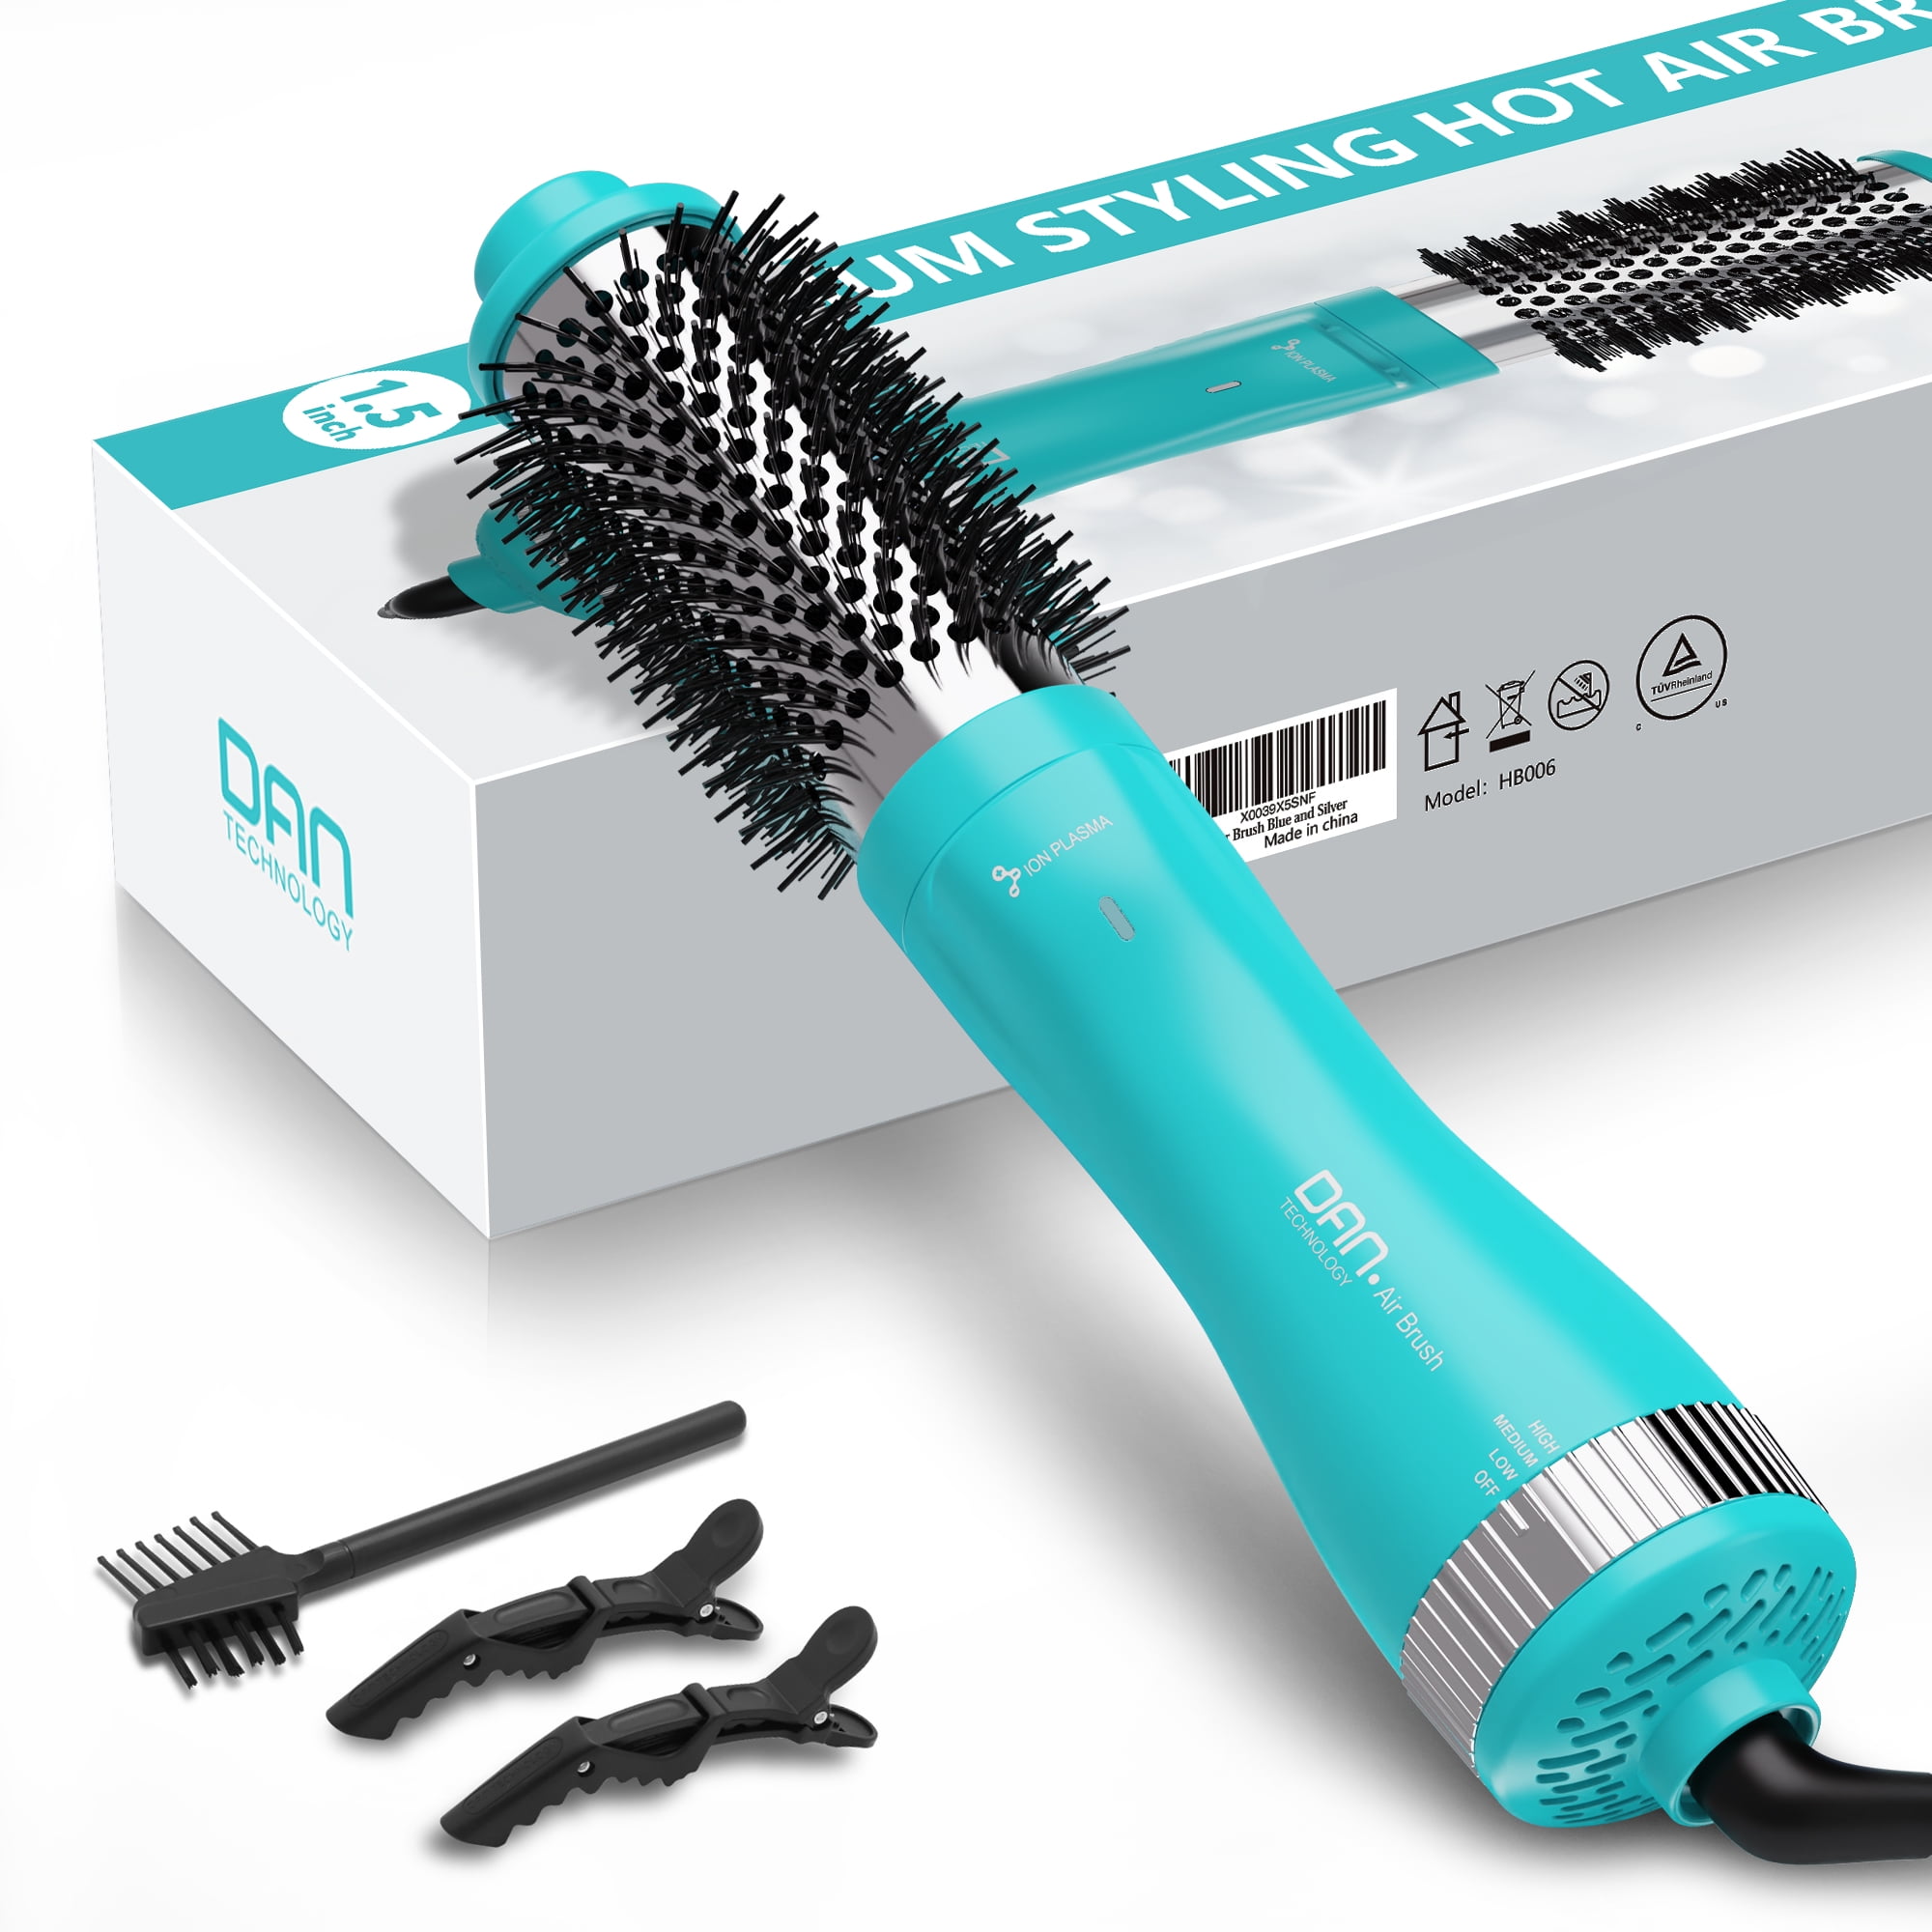 Tymo Hot Air Brush - Hair Dryer & Volumizer, Professional One-Step Hair Dryer Brush with Enhanced Titanium Barrel and Ionic Technology, Hair